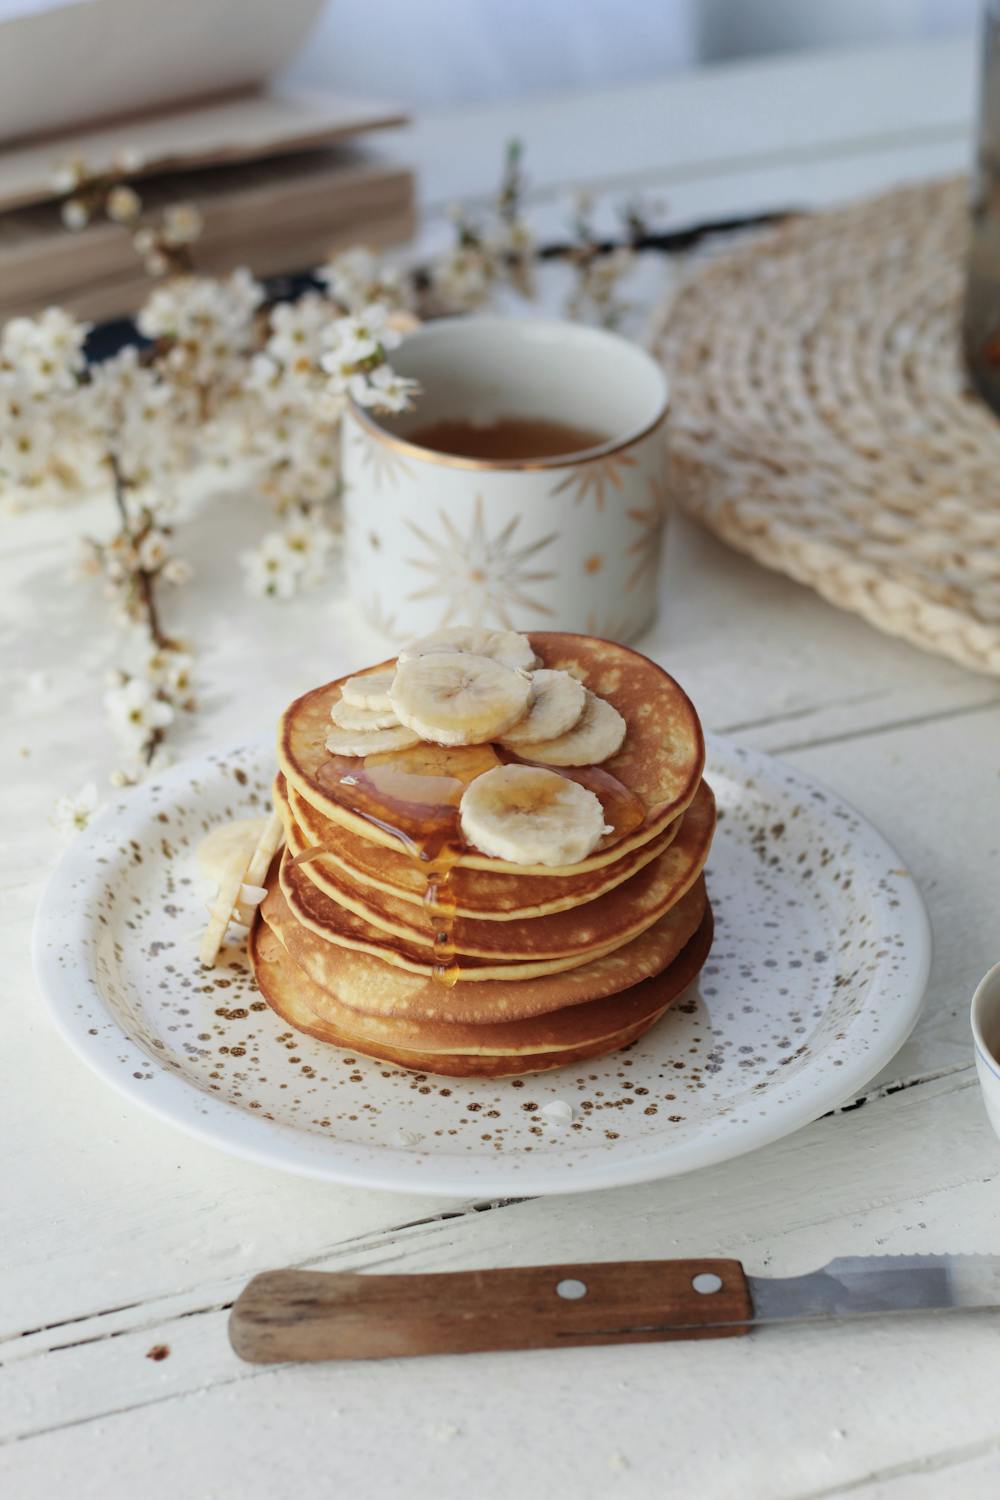 Pancakes with banana and syrup.